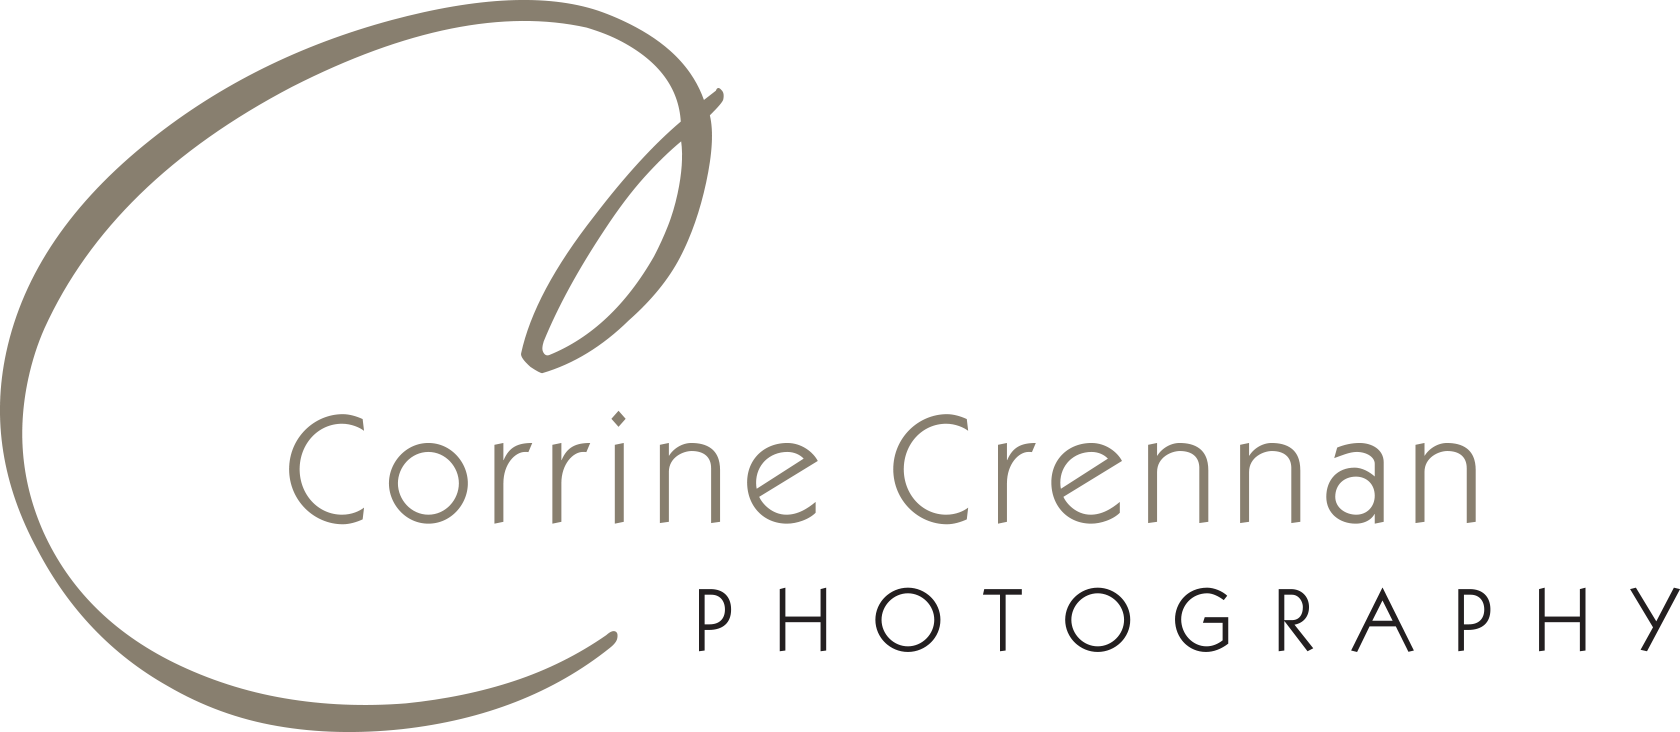 Corrine Crennan Photography